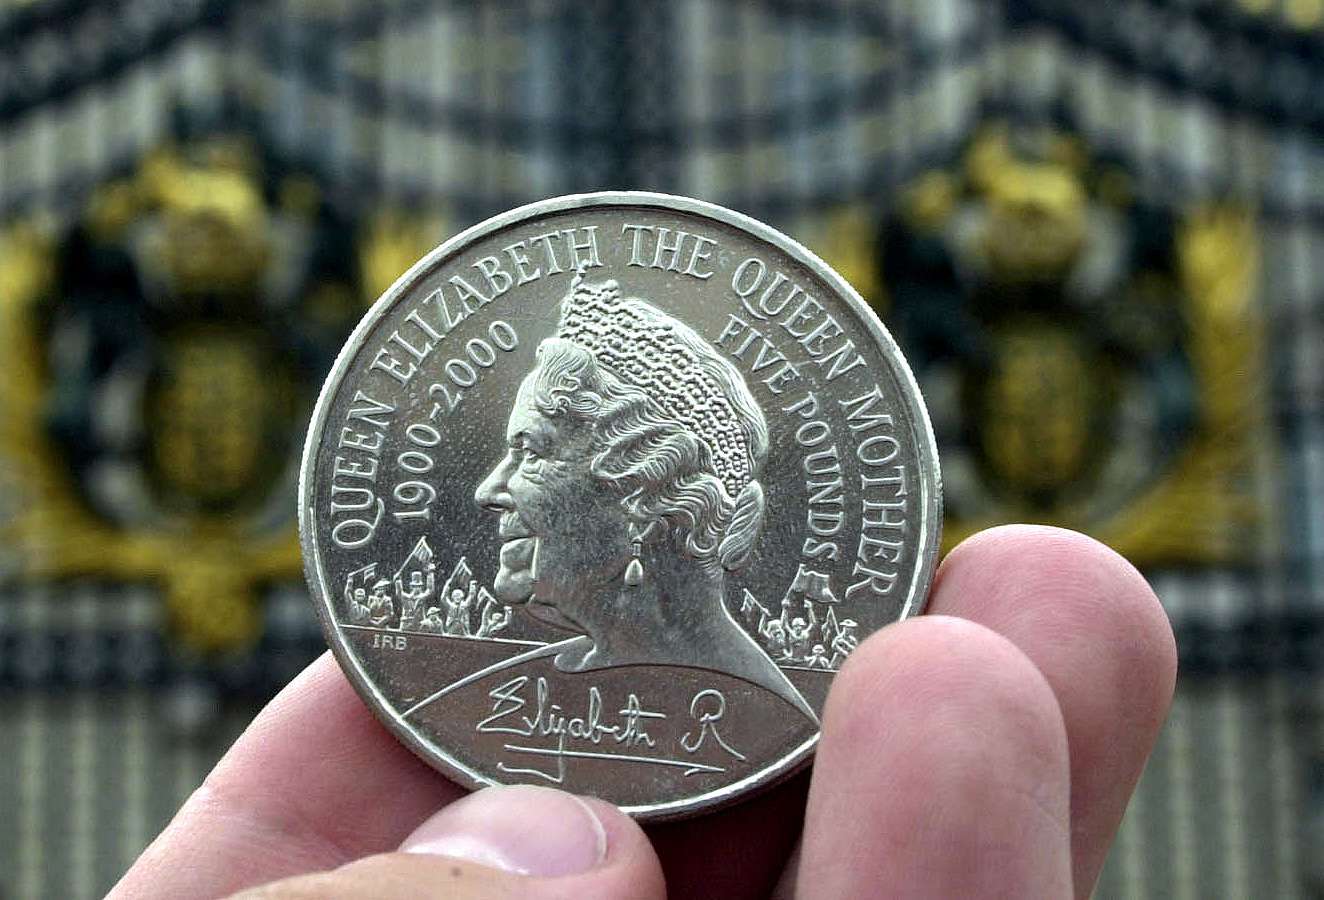 Royal commemorative coin